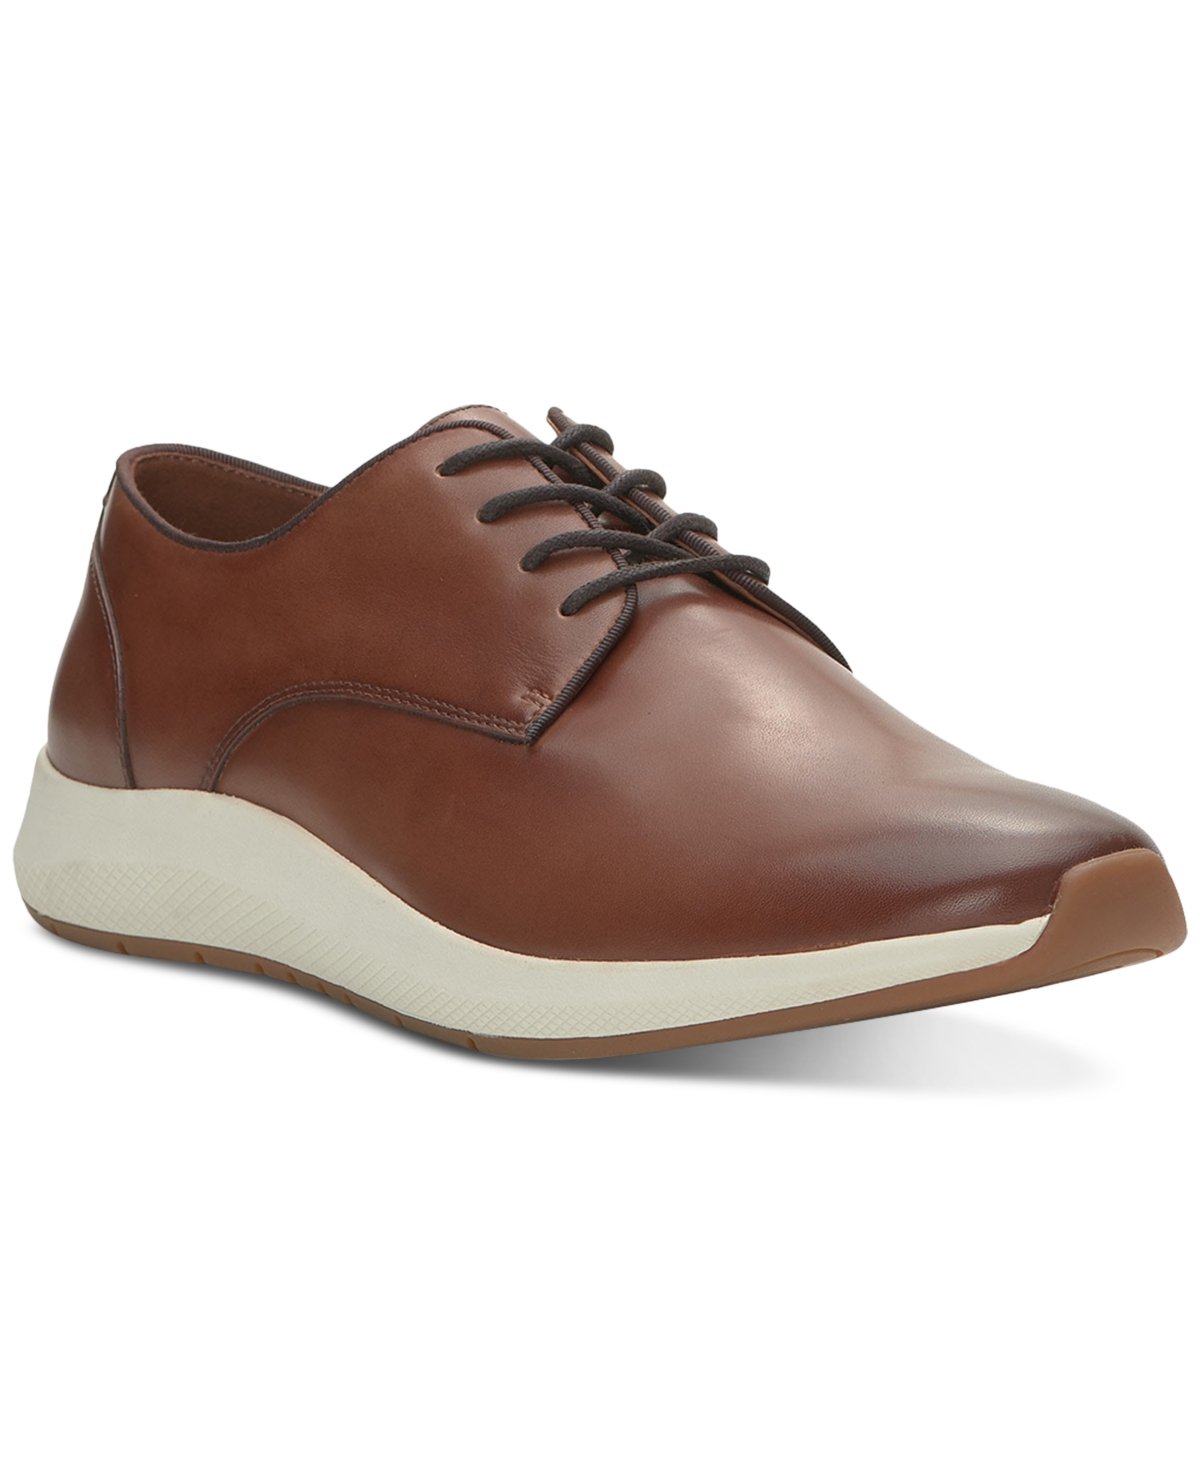 Men's Eadwine Lace-Up Derby Sneakers - Cognac/Brown